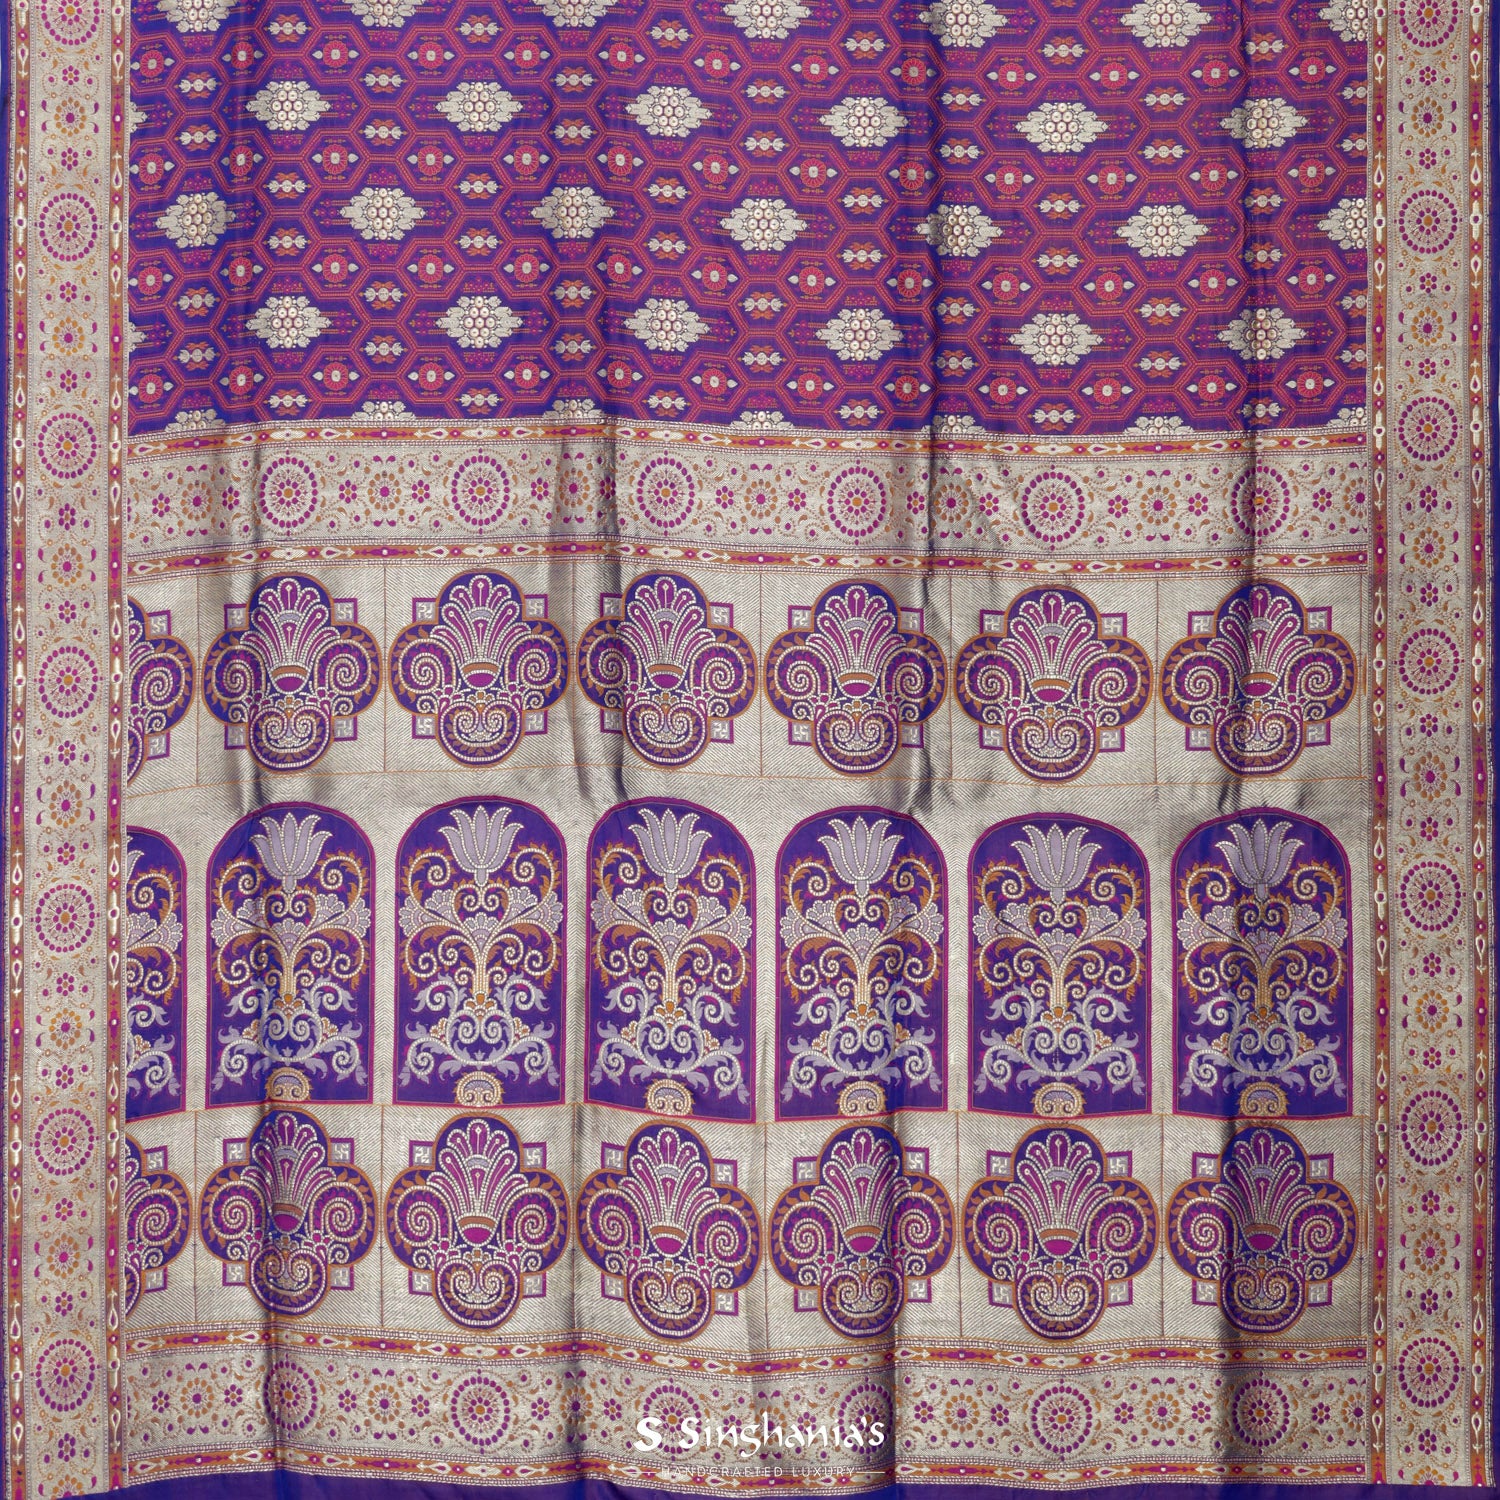 Majorelle Blue Silk Saree With Floral Banarasi Weaving